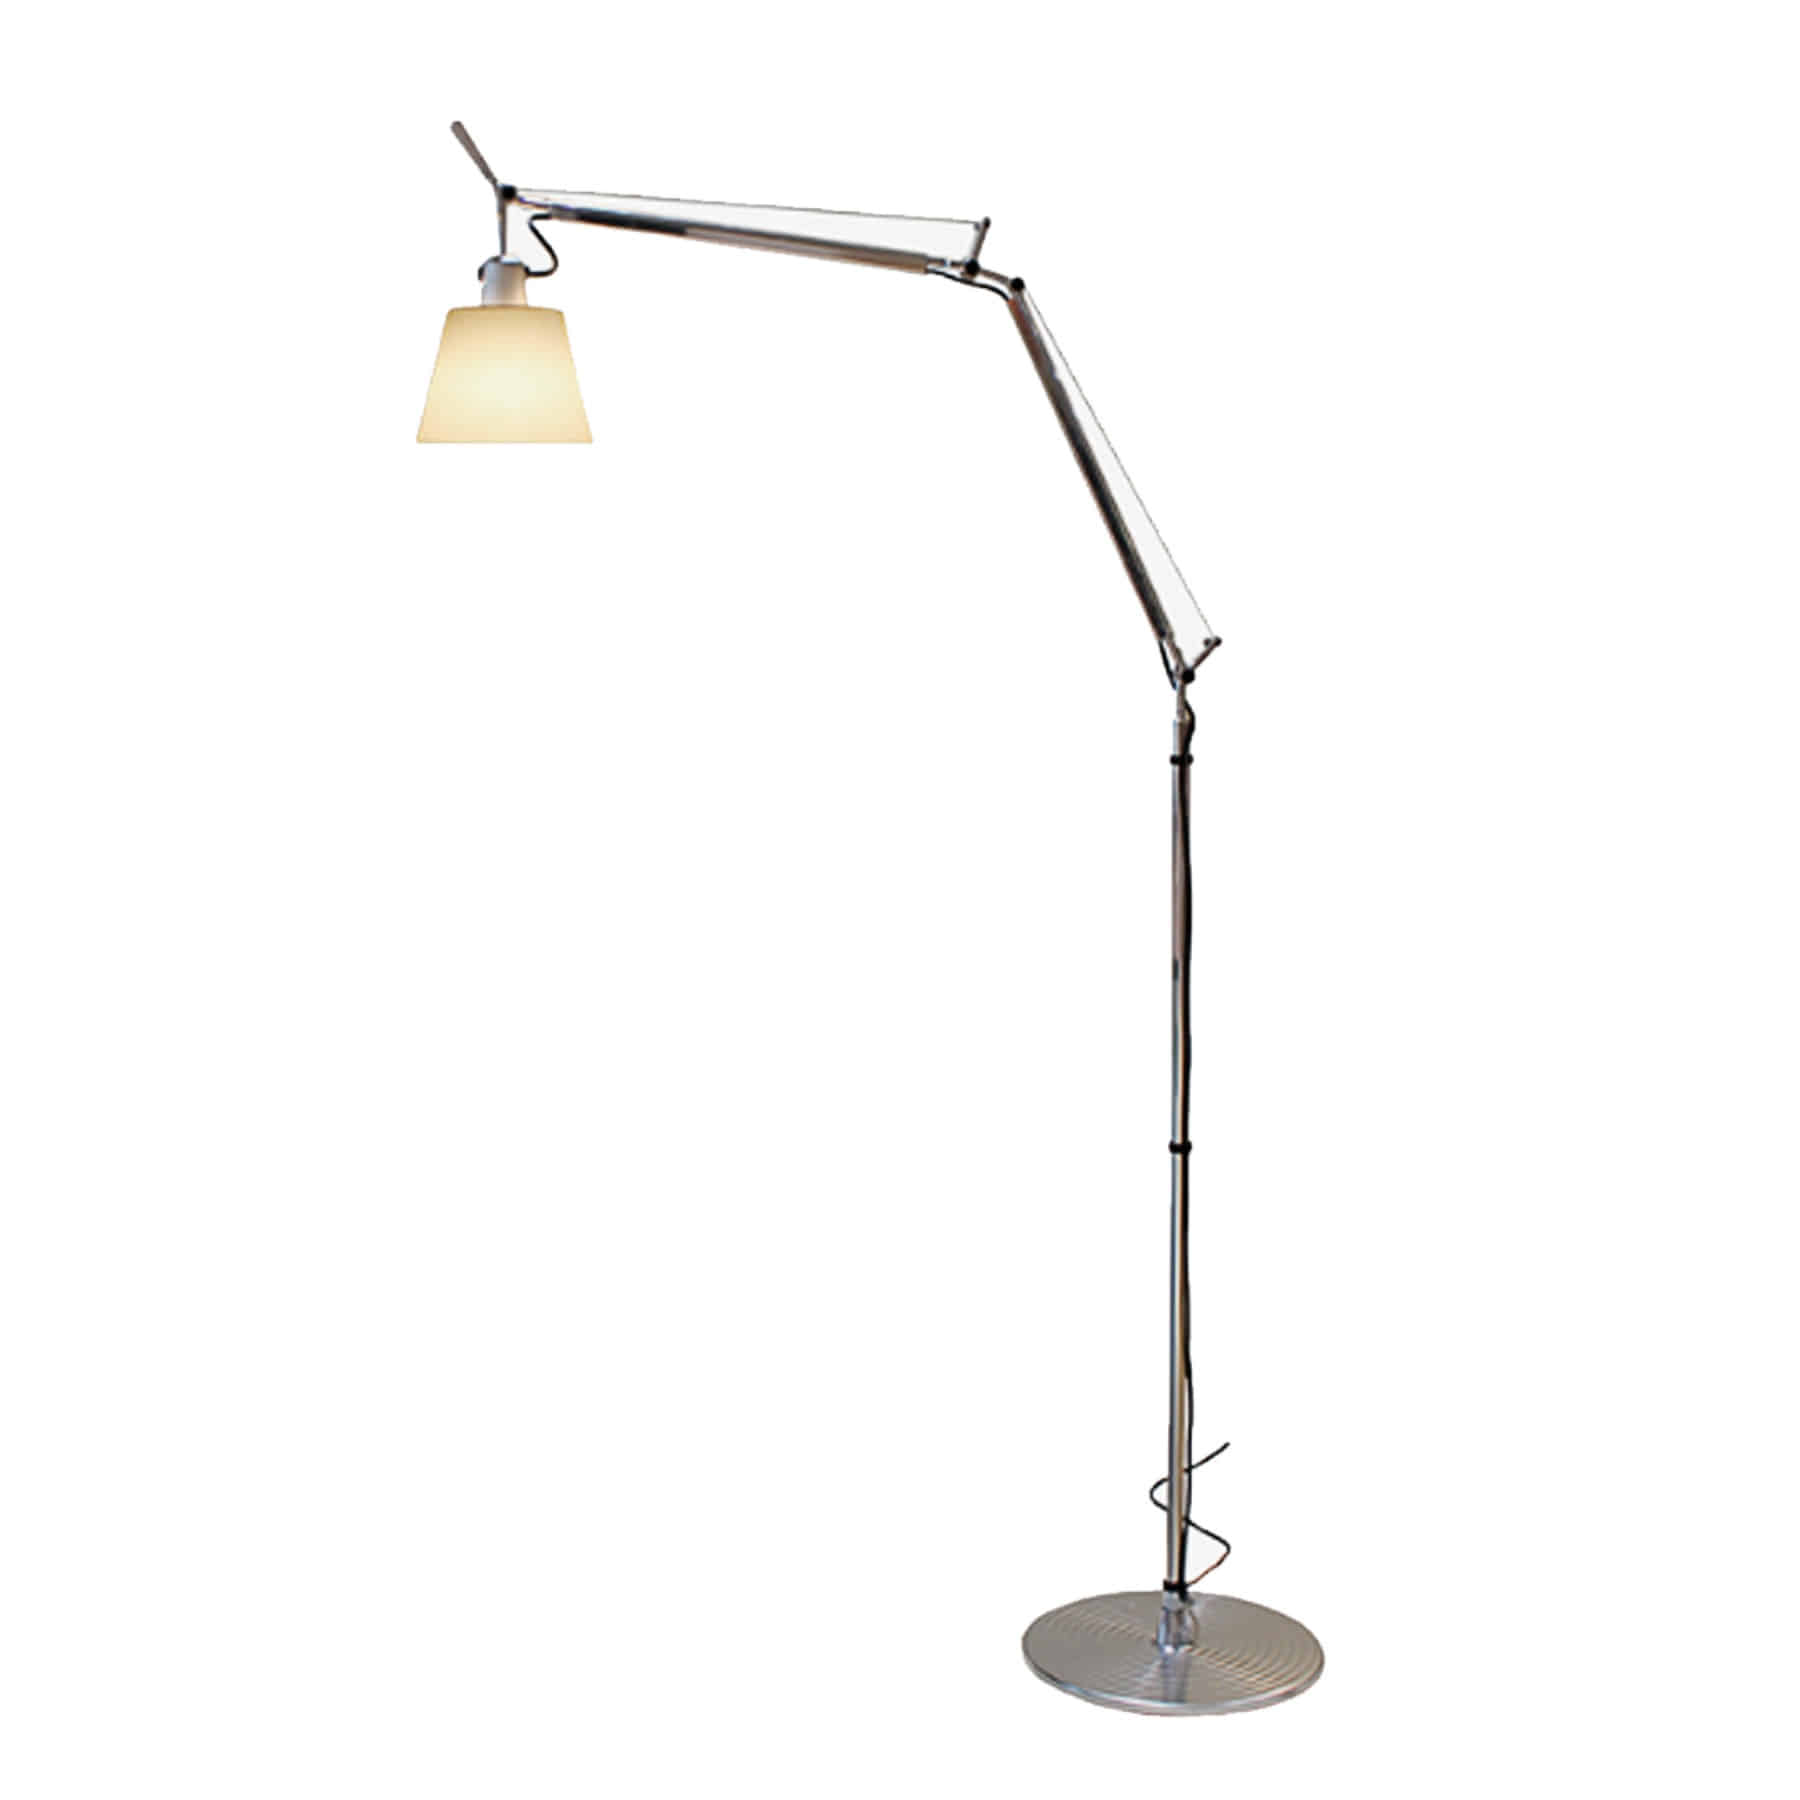 Tolomeo basculante floor Lamp 똘로메오 바스큘란트 플로어 램프